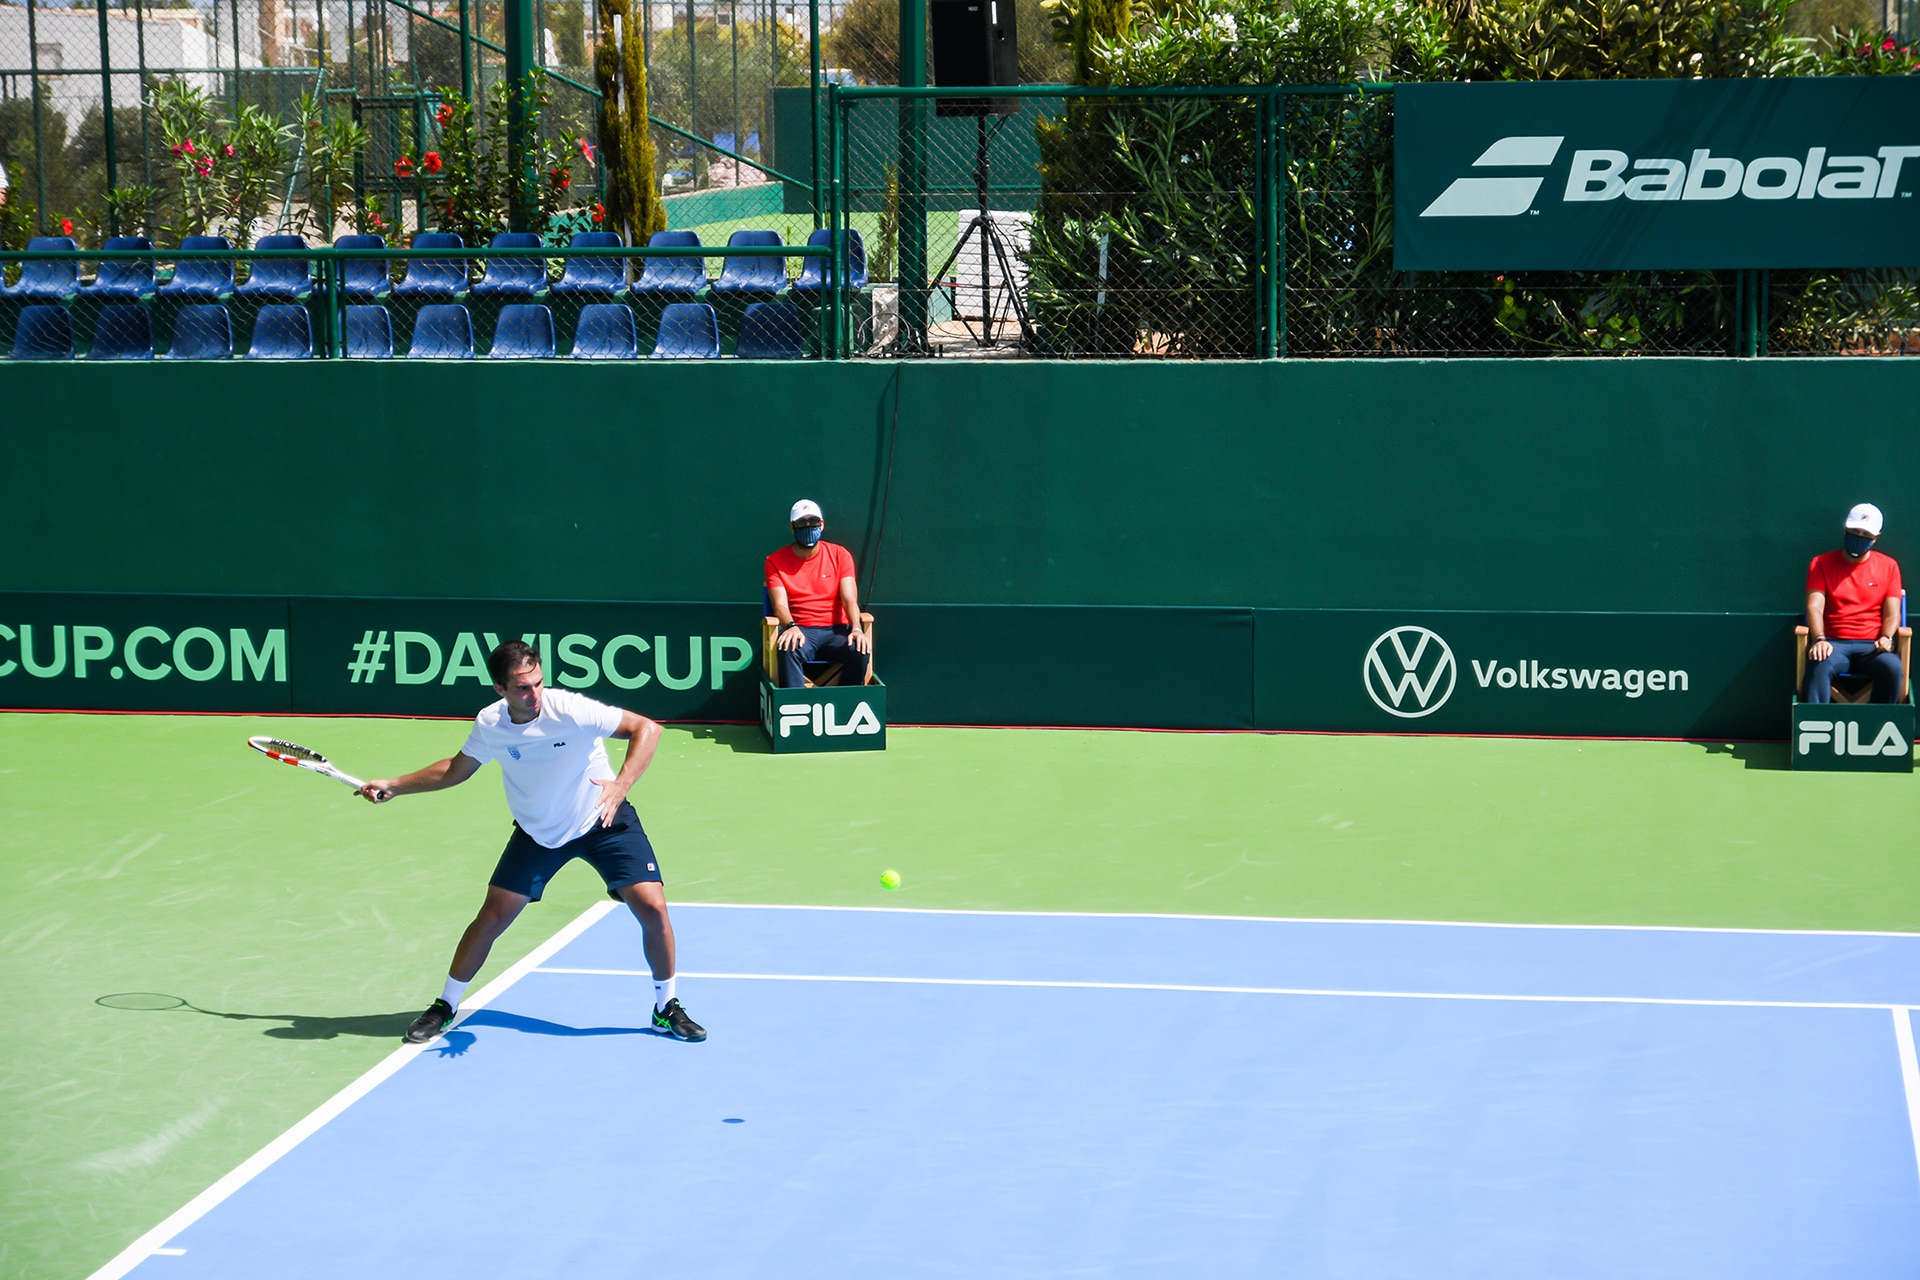 KOSMOCAR VOLKSWAGEN ΕΛΛΑΣ ΛΙΘΟΥΑΝΙΑ DAVIS CUP 5 Η Kosmocar-Volkswagen μέγας χορηγός της Εθνικής Ομάδας Τένις για το Davis Cup